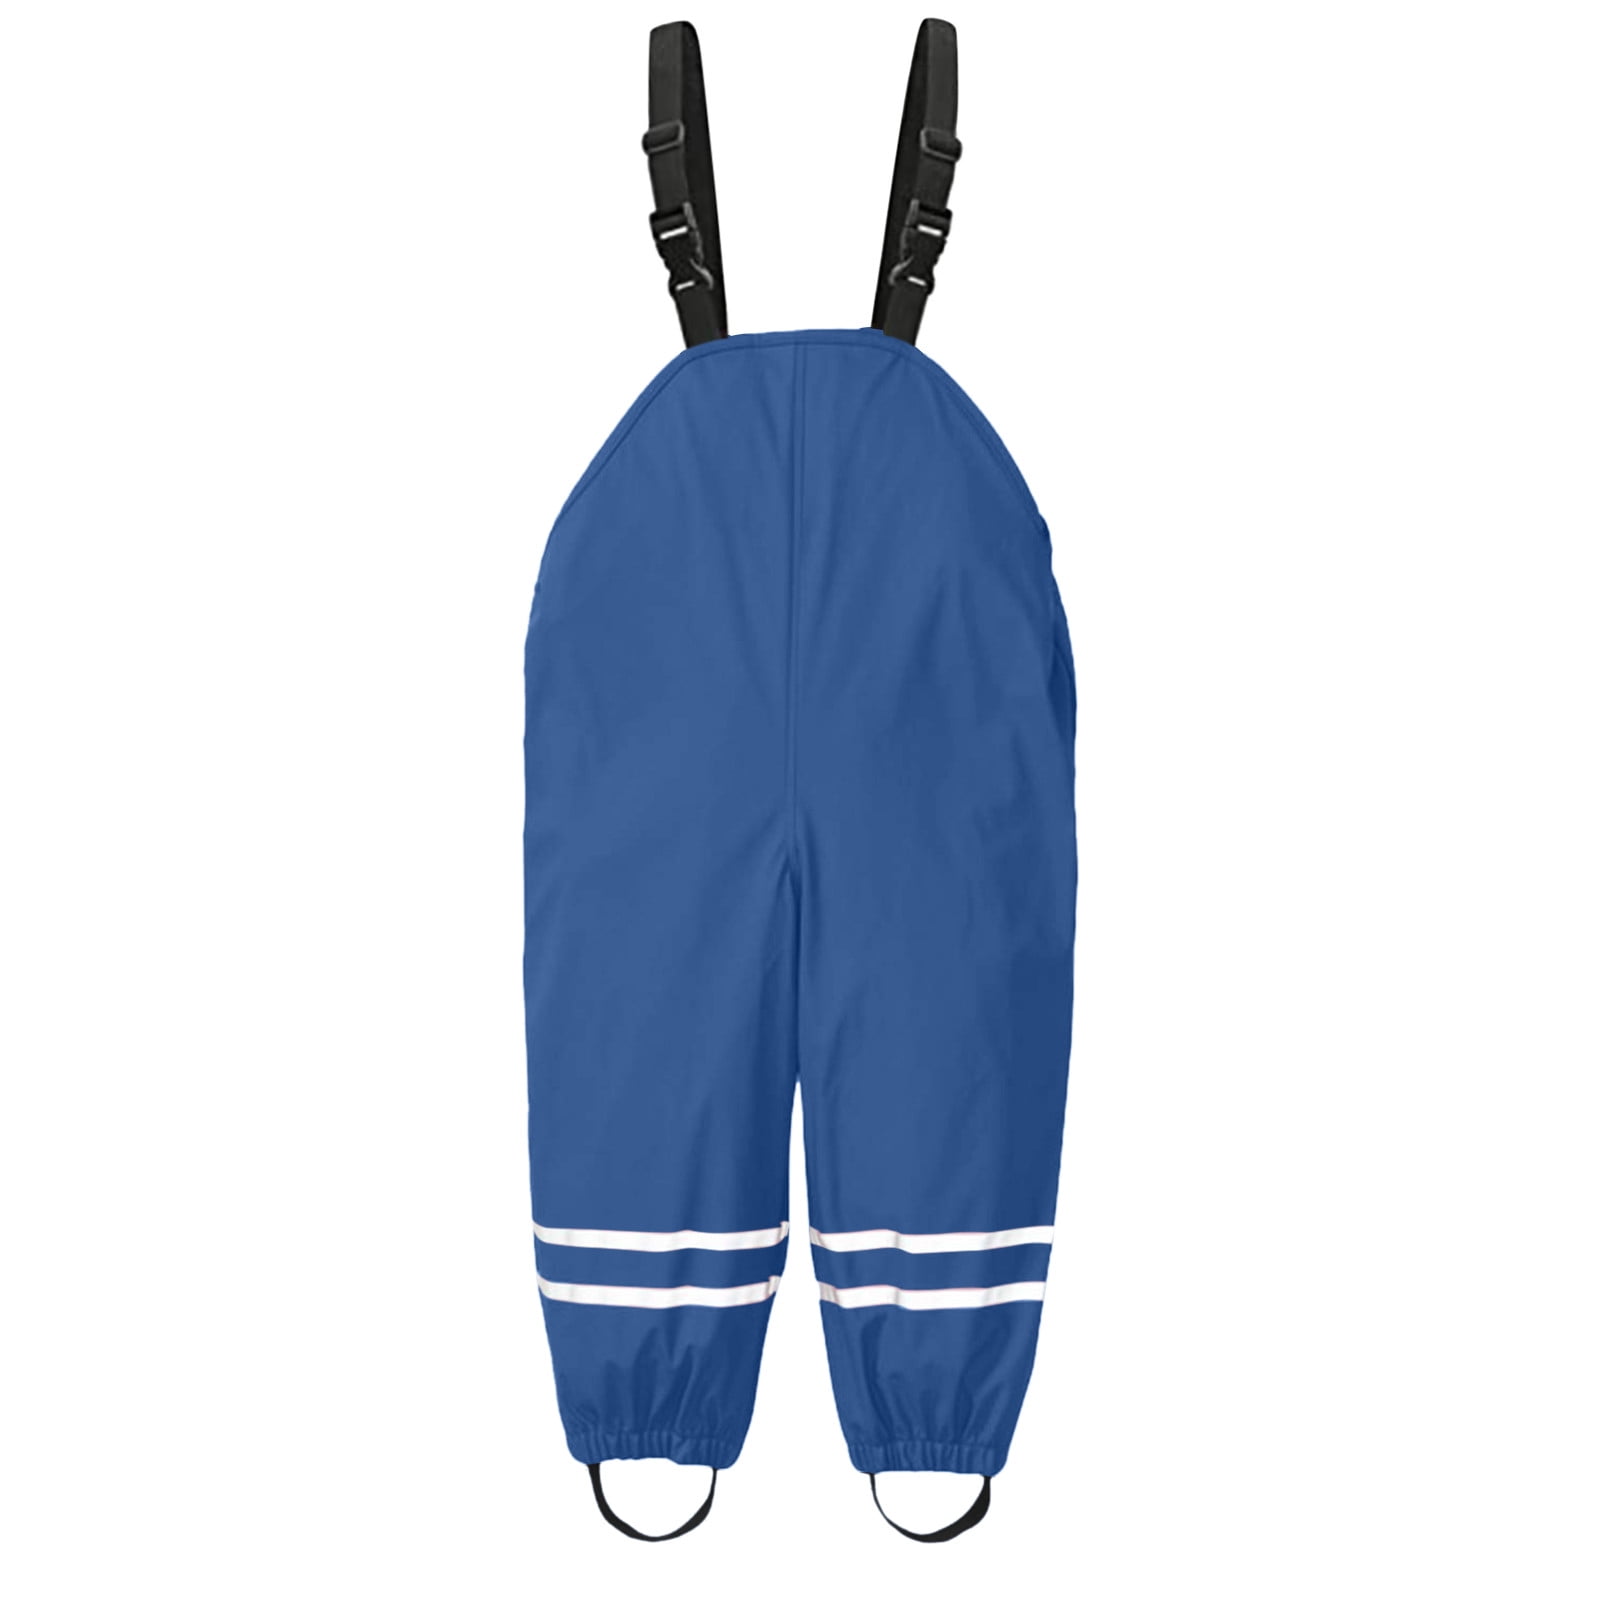 Raincoat for Girls Boys Kids Waterproof Dungarees Rain Clothes Jumpsuit ...